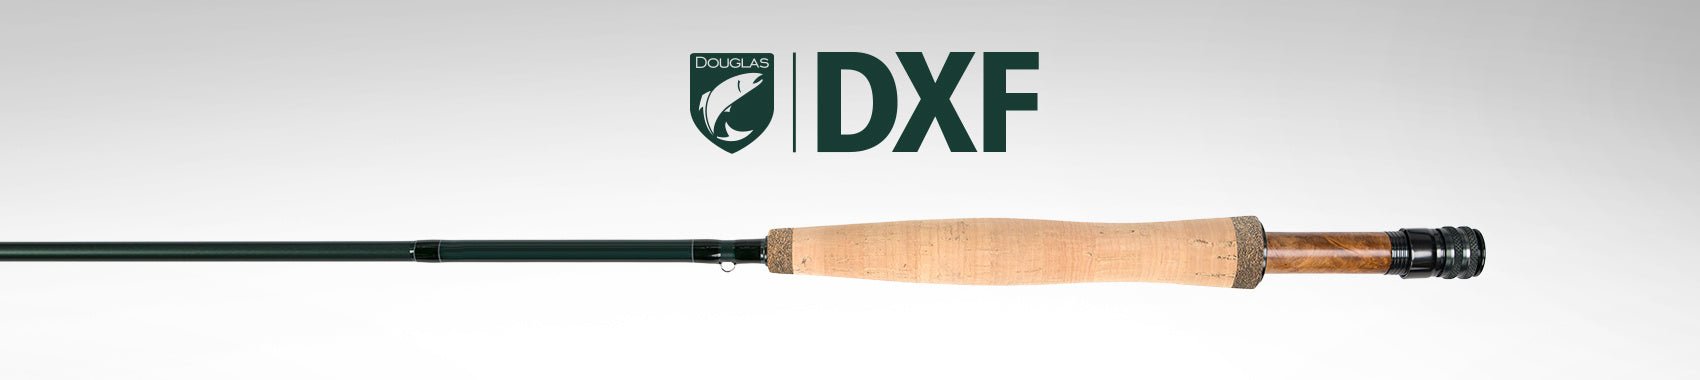 Douglas - DXF - 486-4